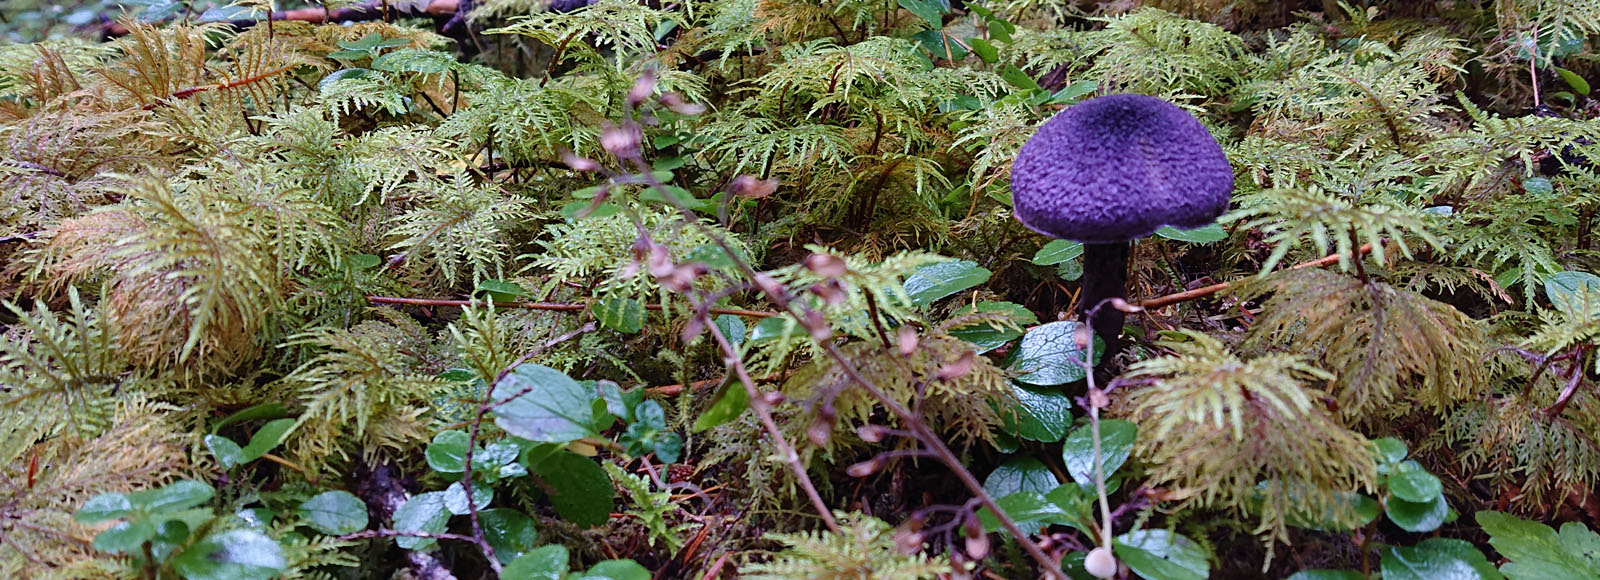 Purpple mushroom sprouting amid moss